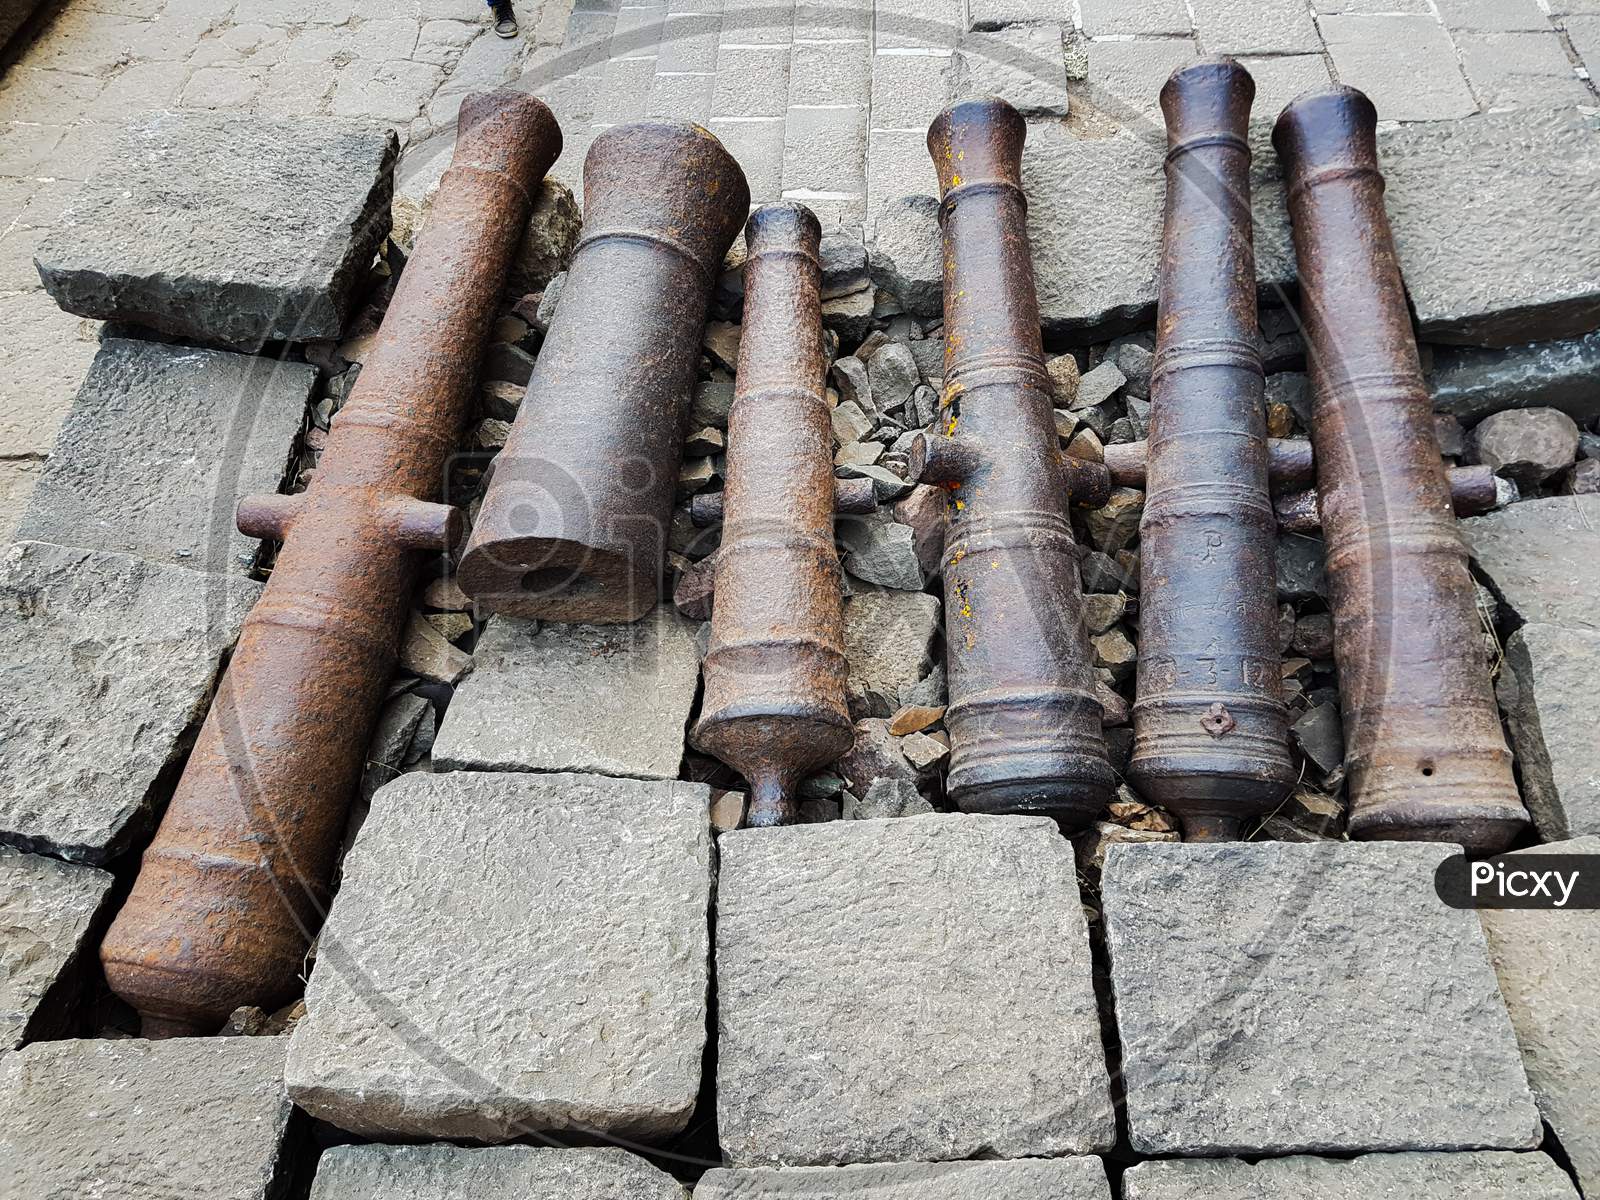 Medium closeup shot of ancient cast iron canons lying on the ground